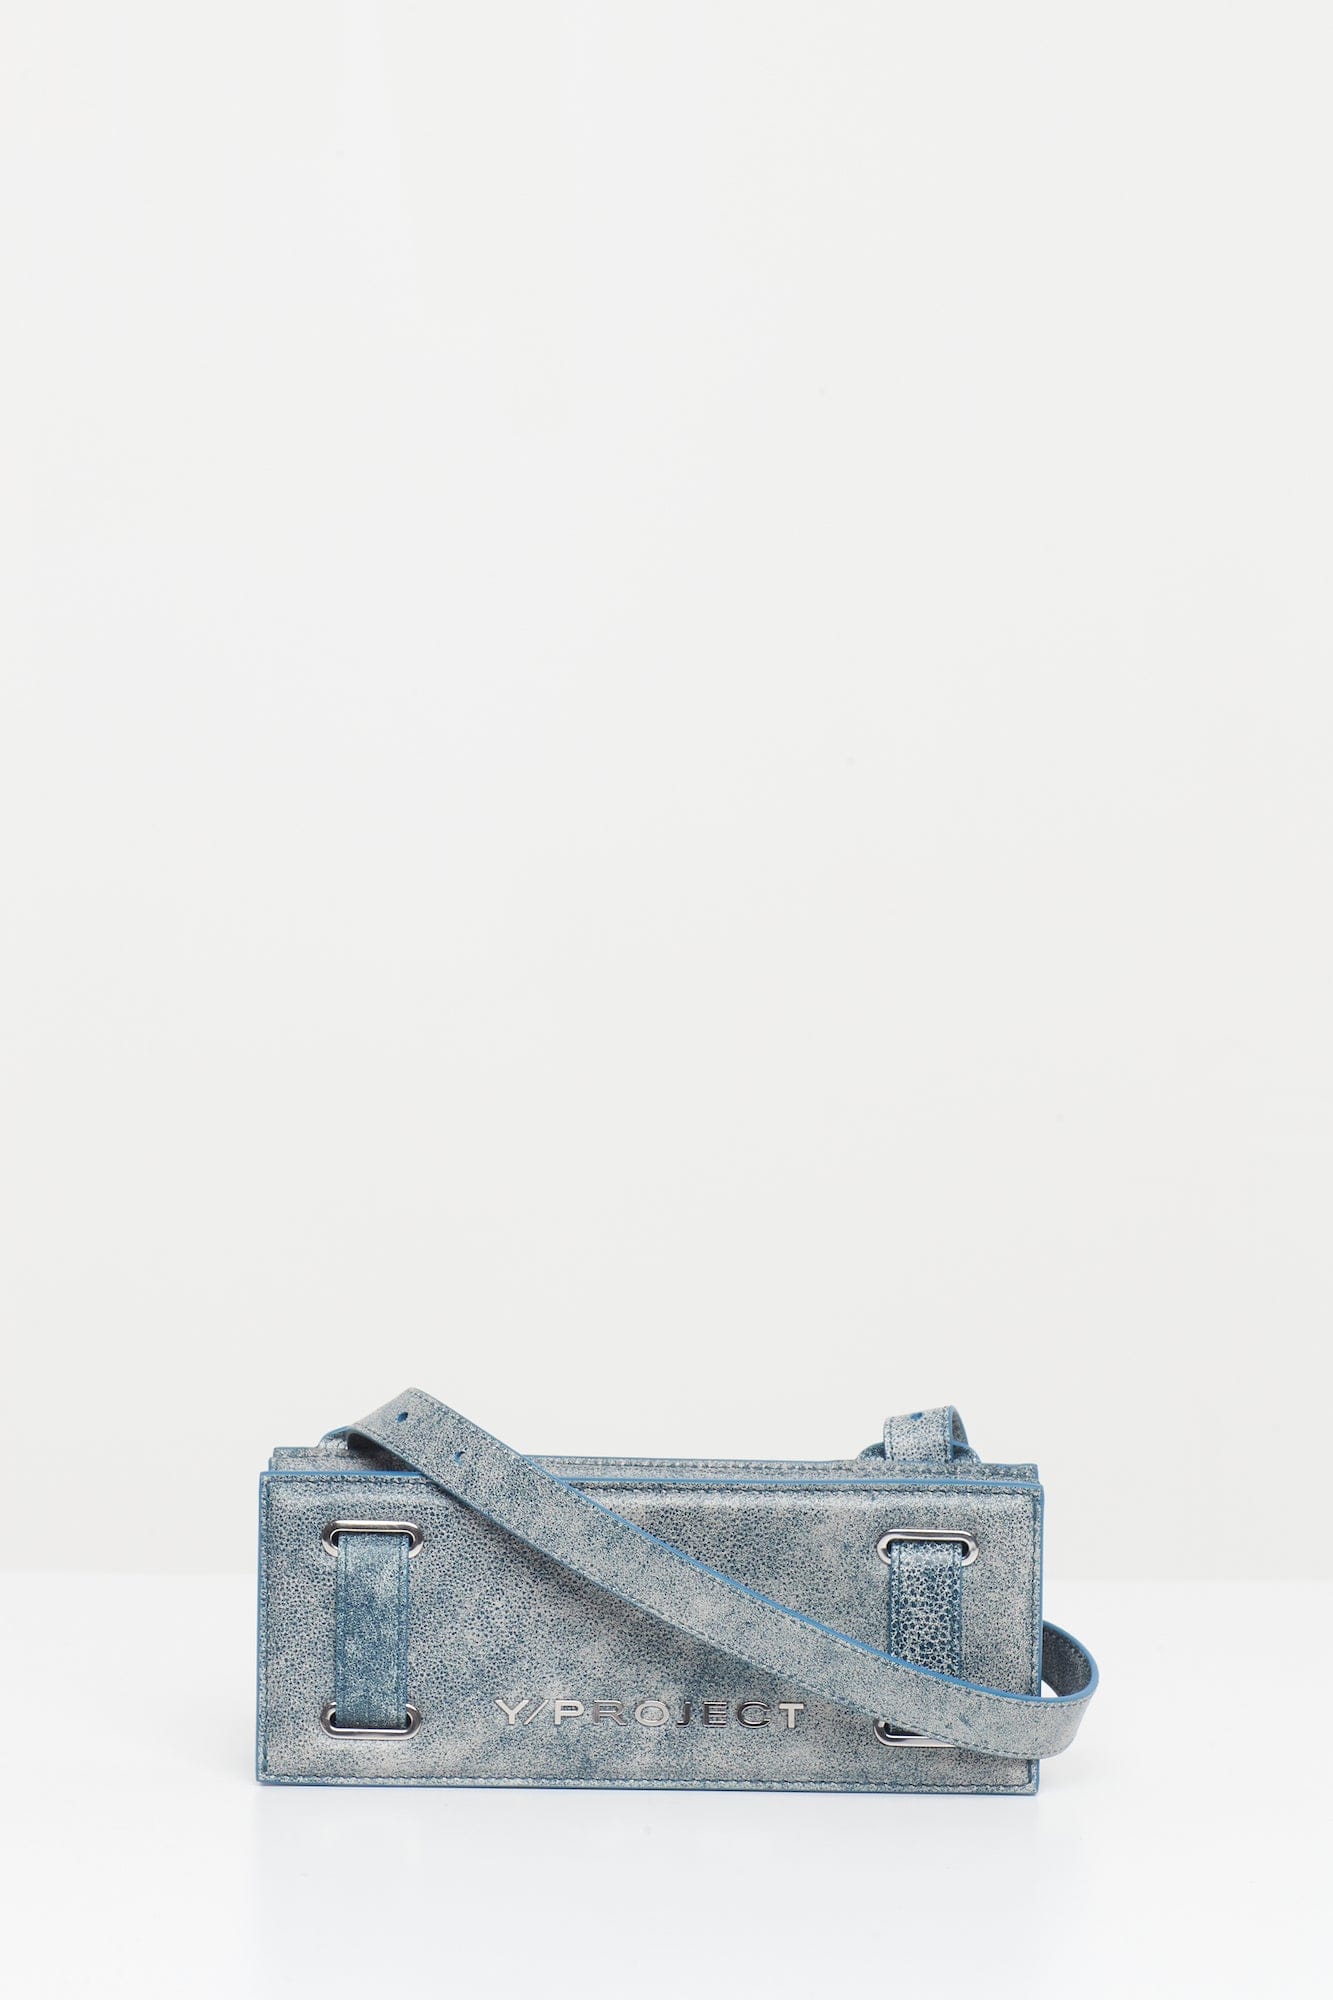 Y/Project Mini Accordion Bag in Blue Denim Leather